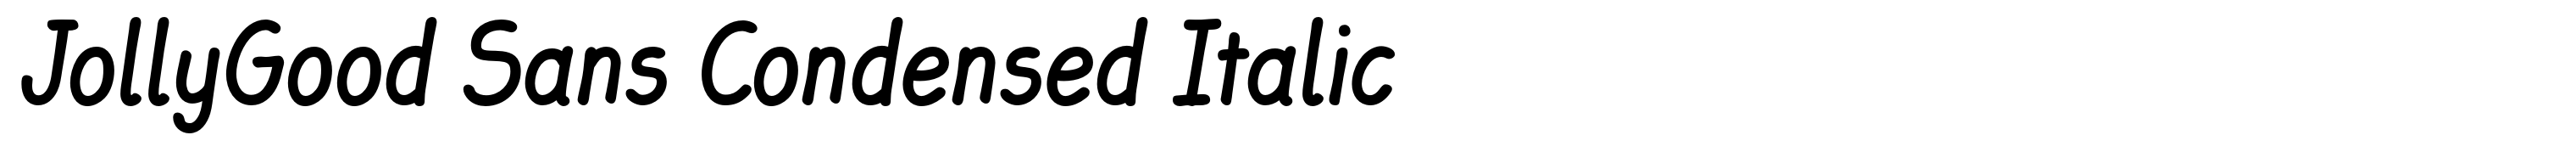 JollyGood Sans Condensed Italic